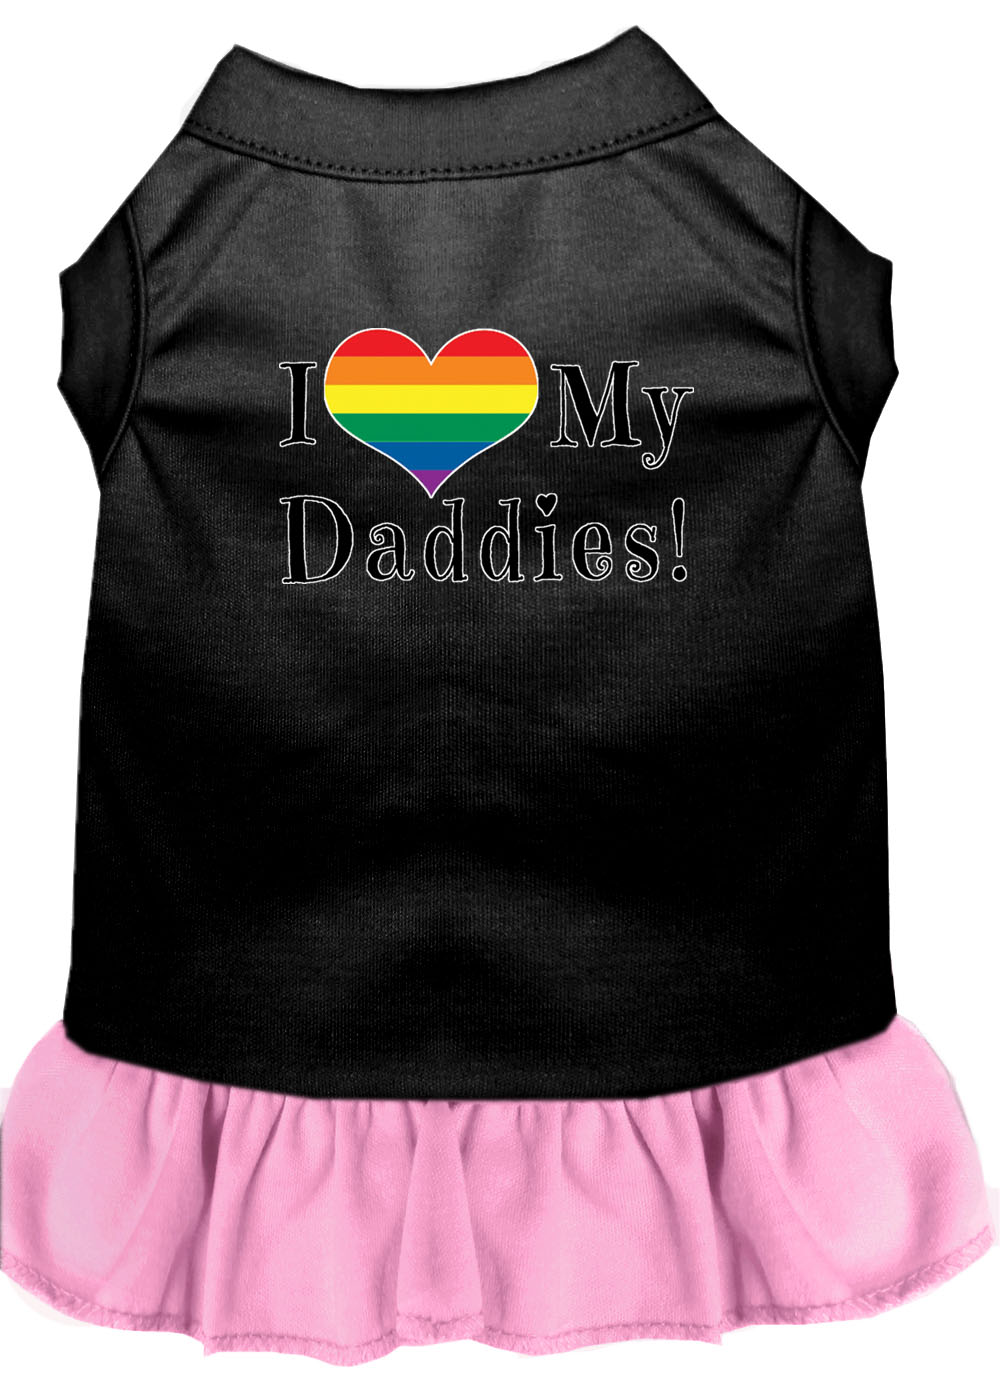 I Heart my Daddies Screen Print Dog Dress Black with Light Pink Lg